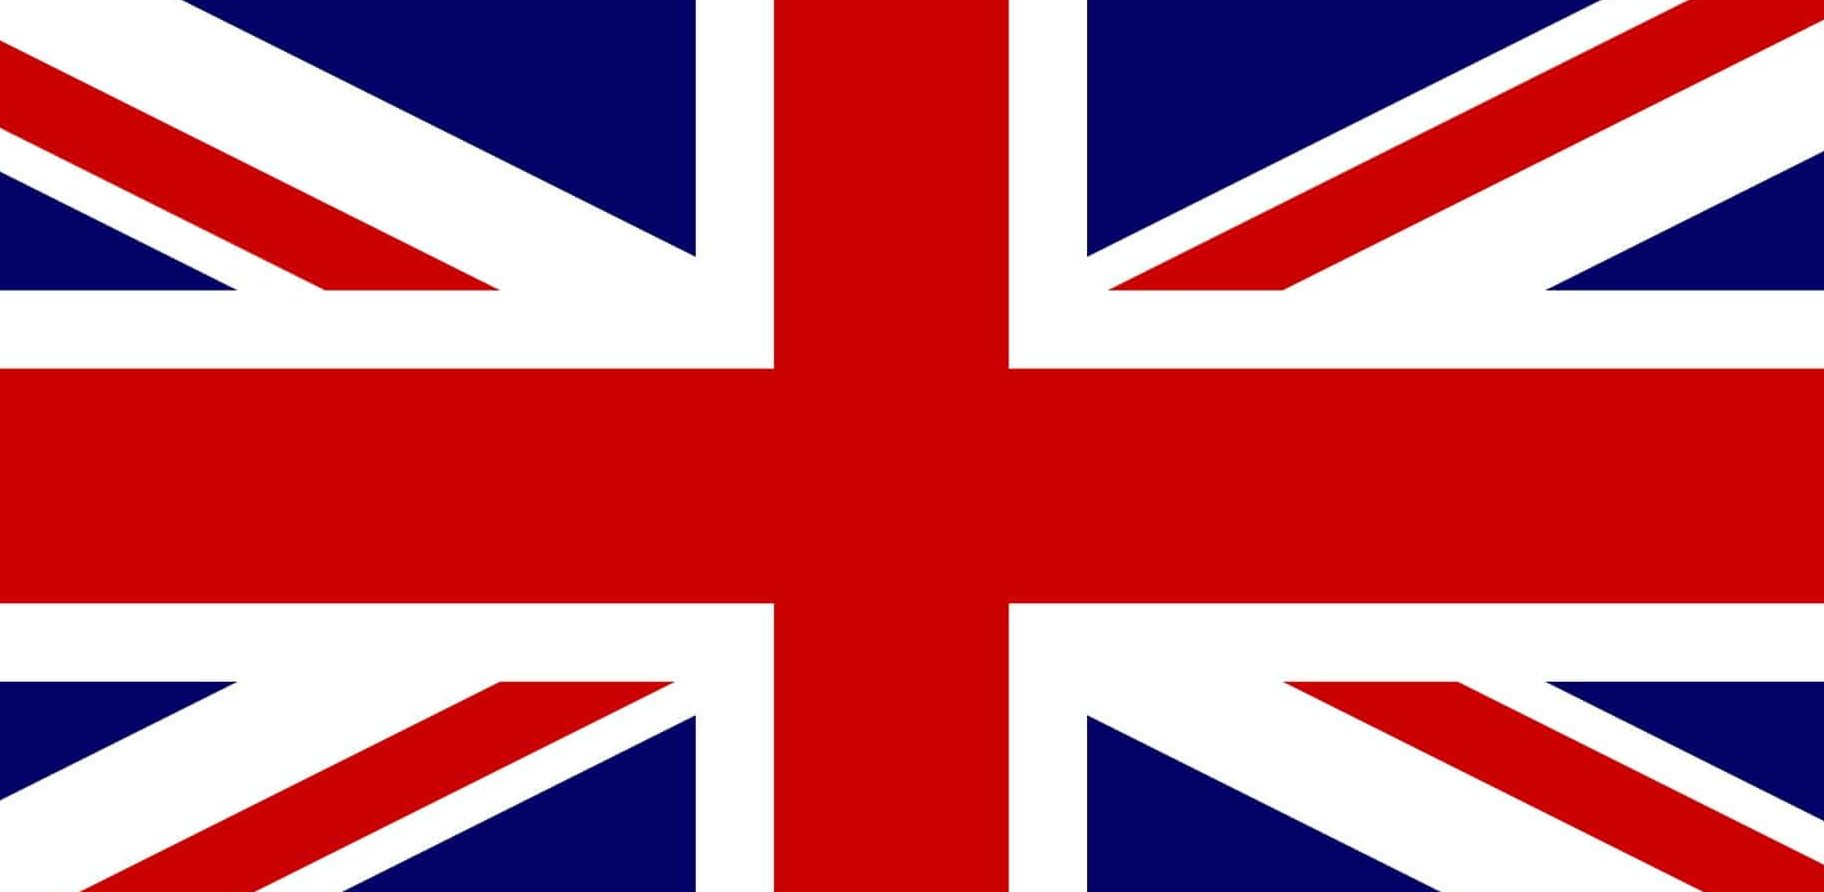 Bandeira britânica - Union Jack